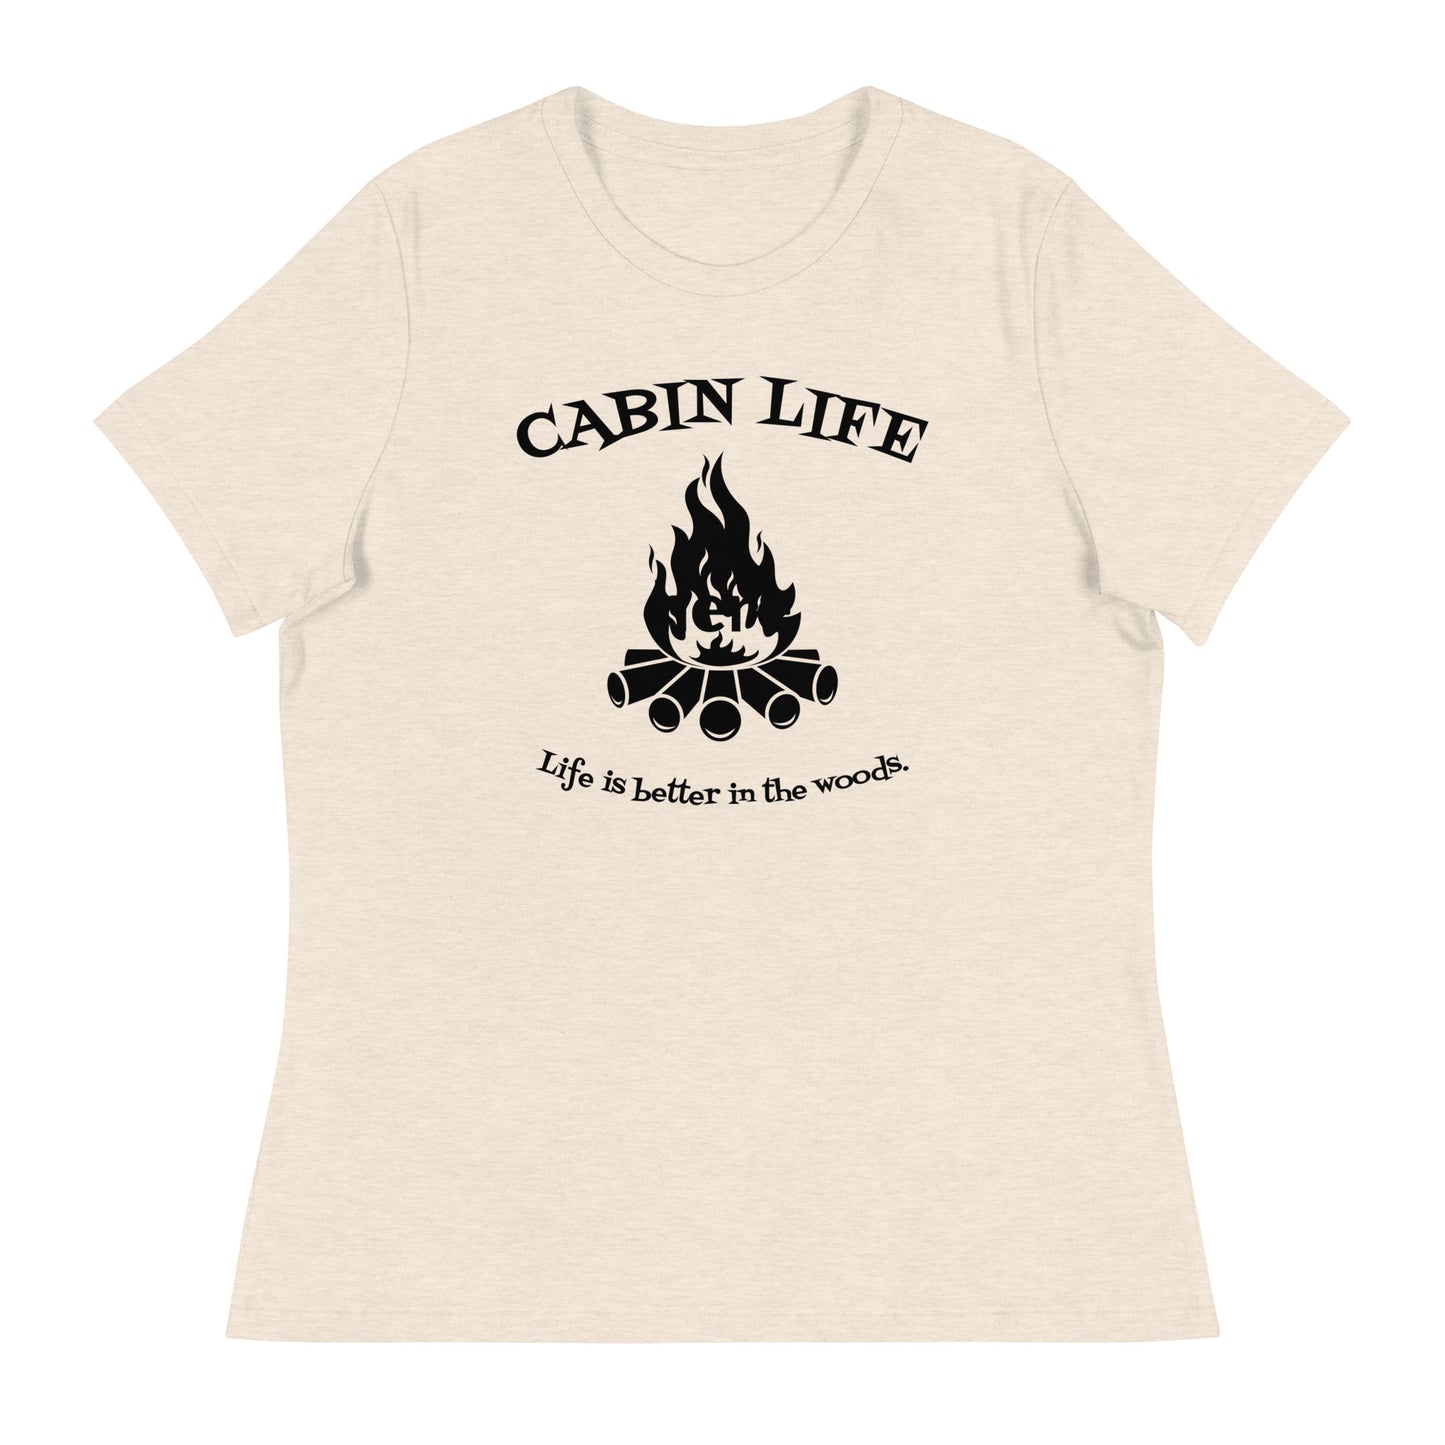 Cabin Life - Life is Better in the Woods - Women's tee